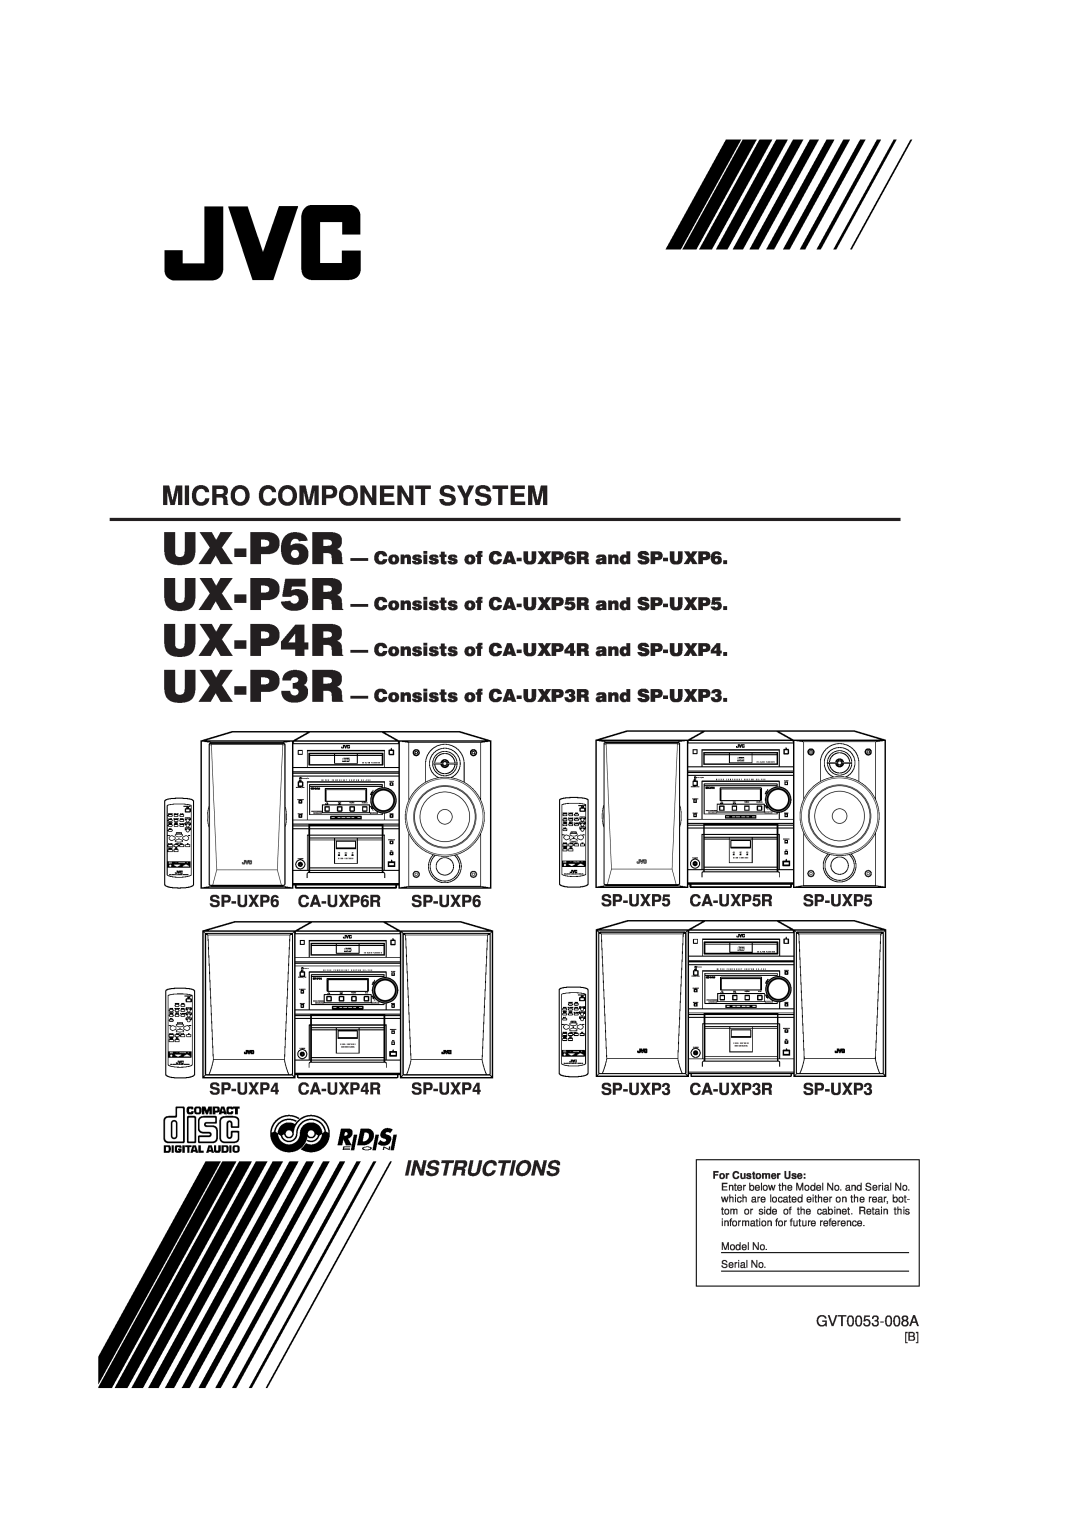 JVC CA-UXP4R manual UX-P6R - Consists of CA-UXP6Rand SP-UXP6, UX-P5R - Consists of CA-UXP5Rand SP-UXP5, SP-UXP4, SP-UXP3 